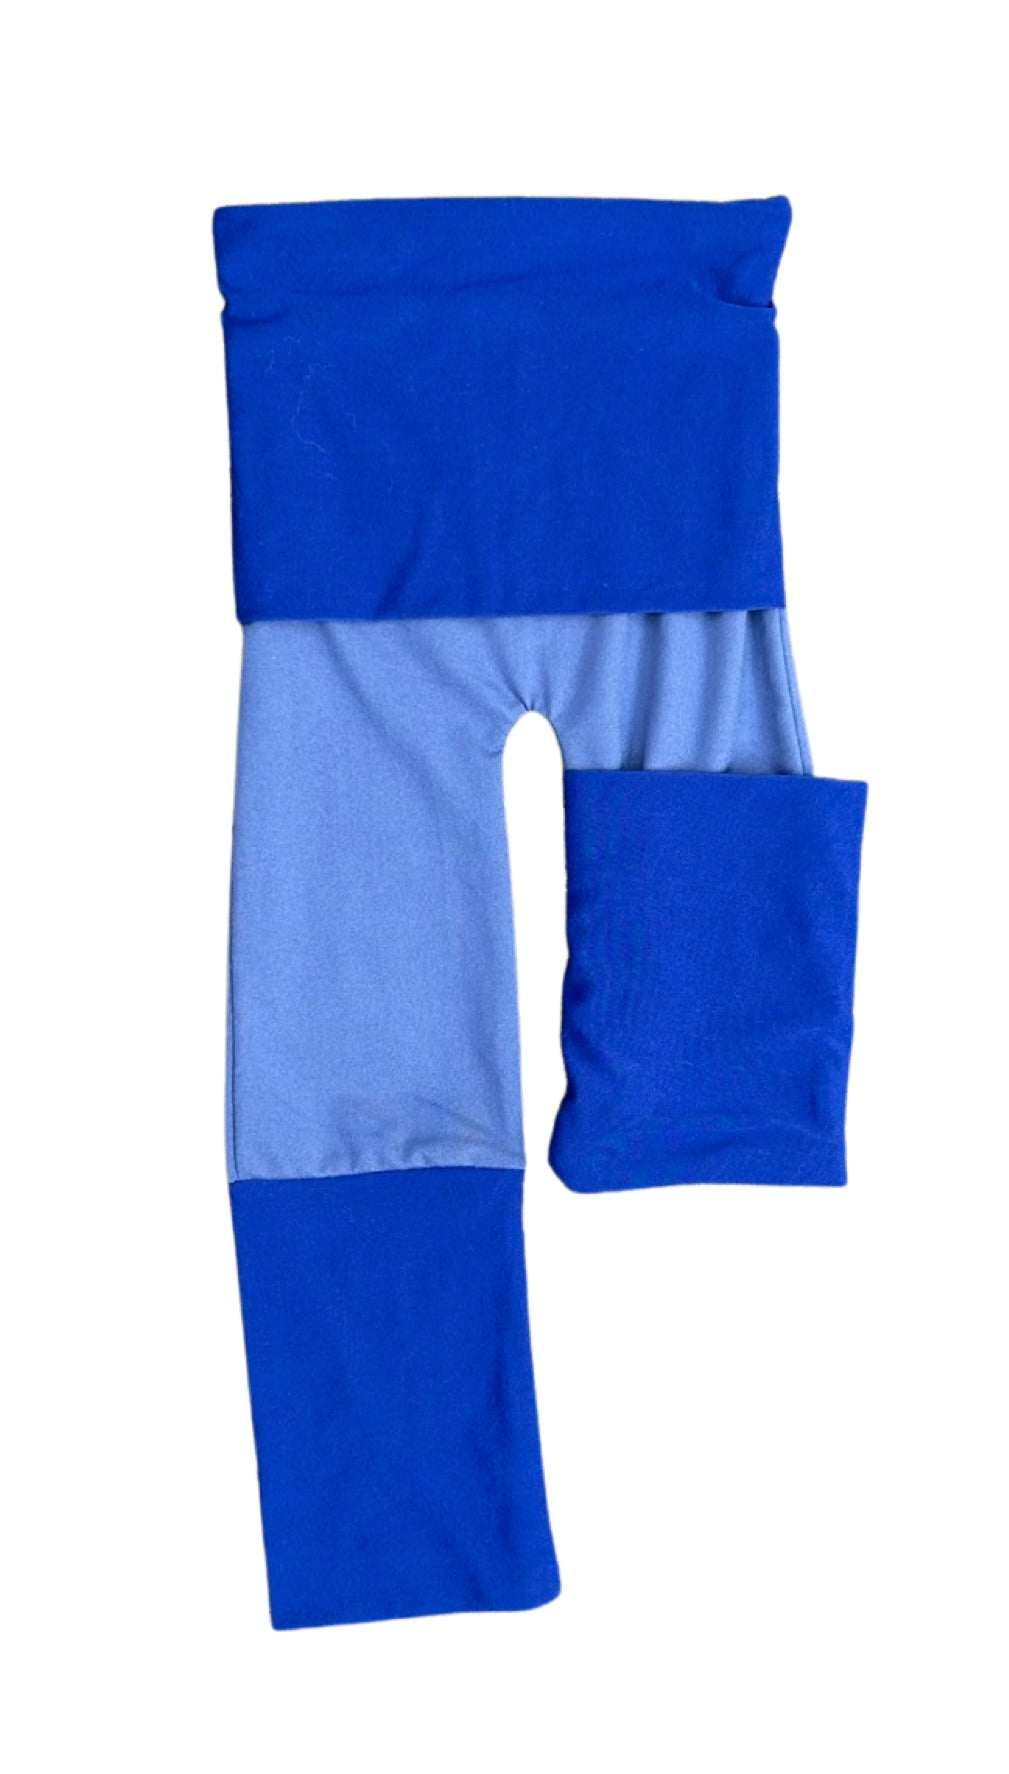 Adjustable Pants - Light Blue with Dark Blue